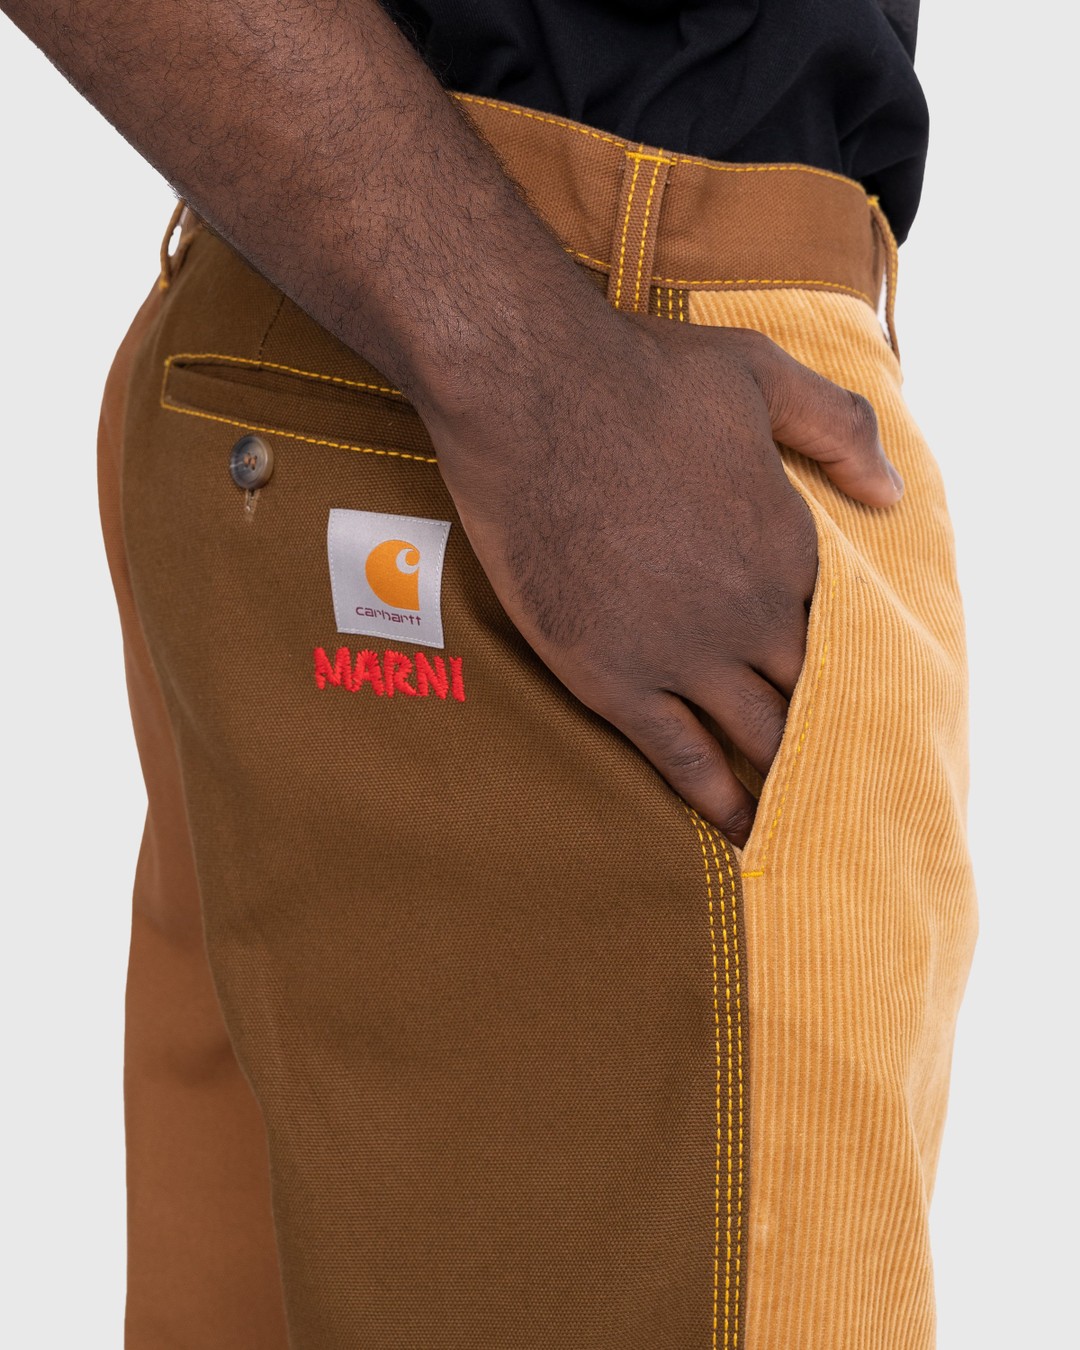 Marni x Carhartt WIP – Colorblocked Trousers Brown - Pants - Brown - Image 5